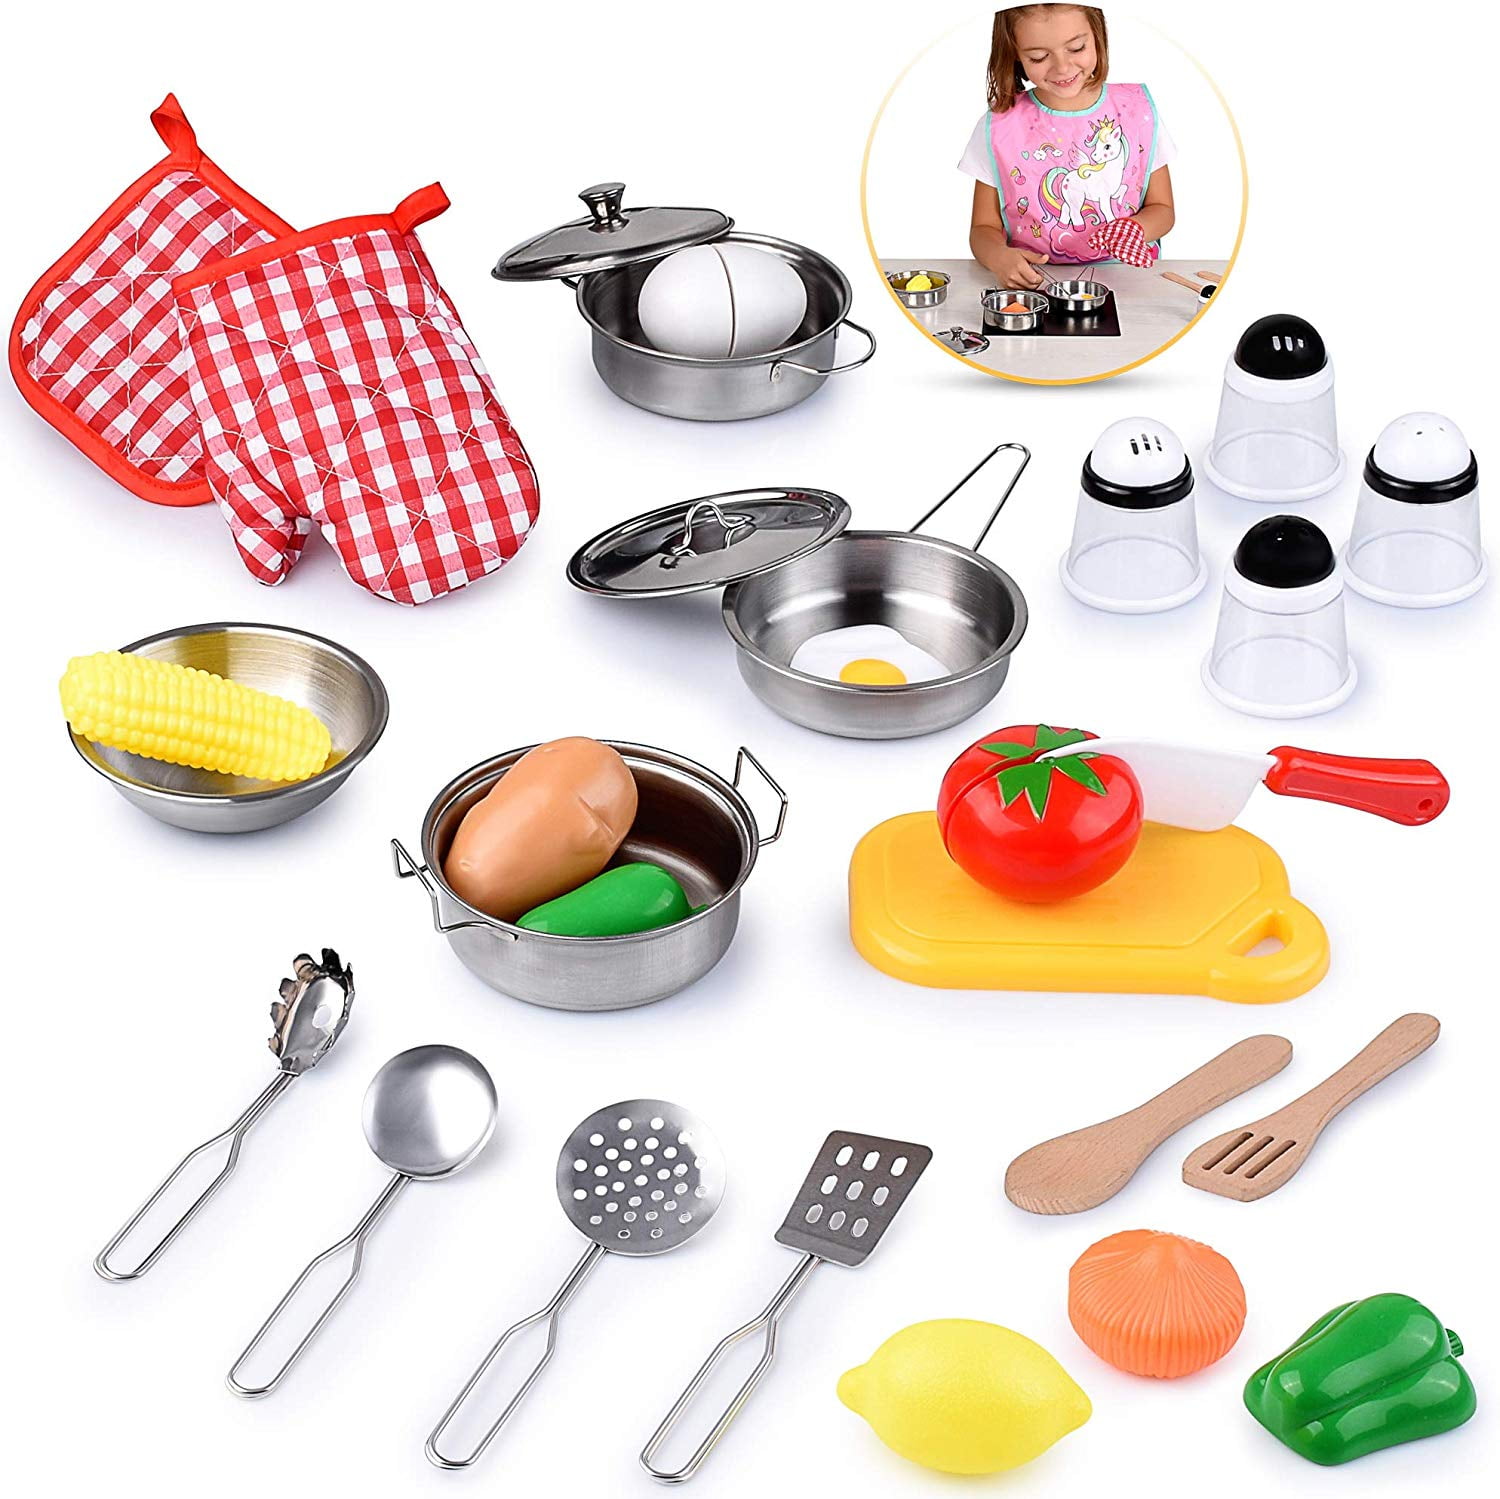 Details about   Melissa & Doug Stir & Serve Kitchen Cooking Utensils Pretend Play Age 3 Years 